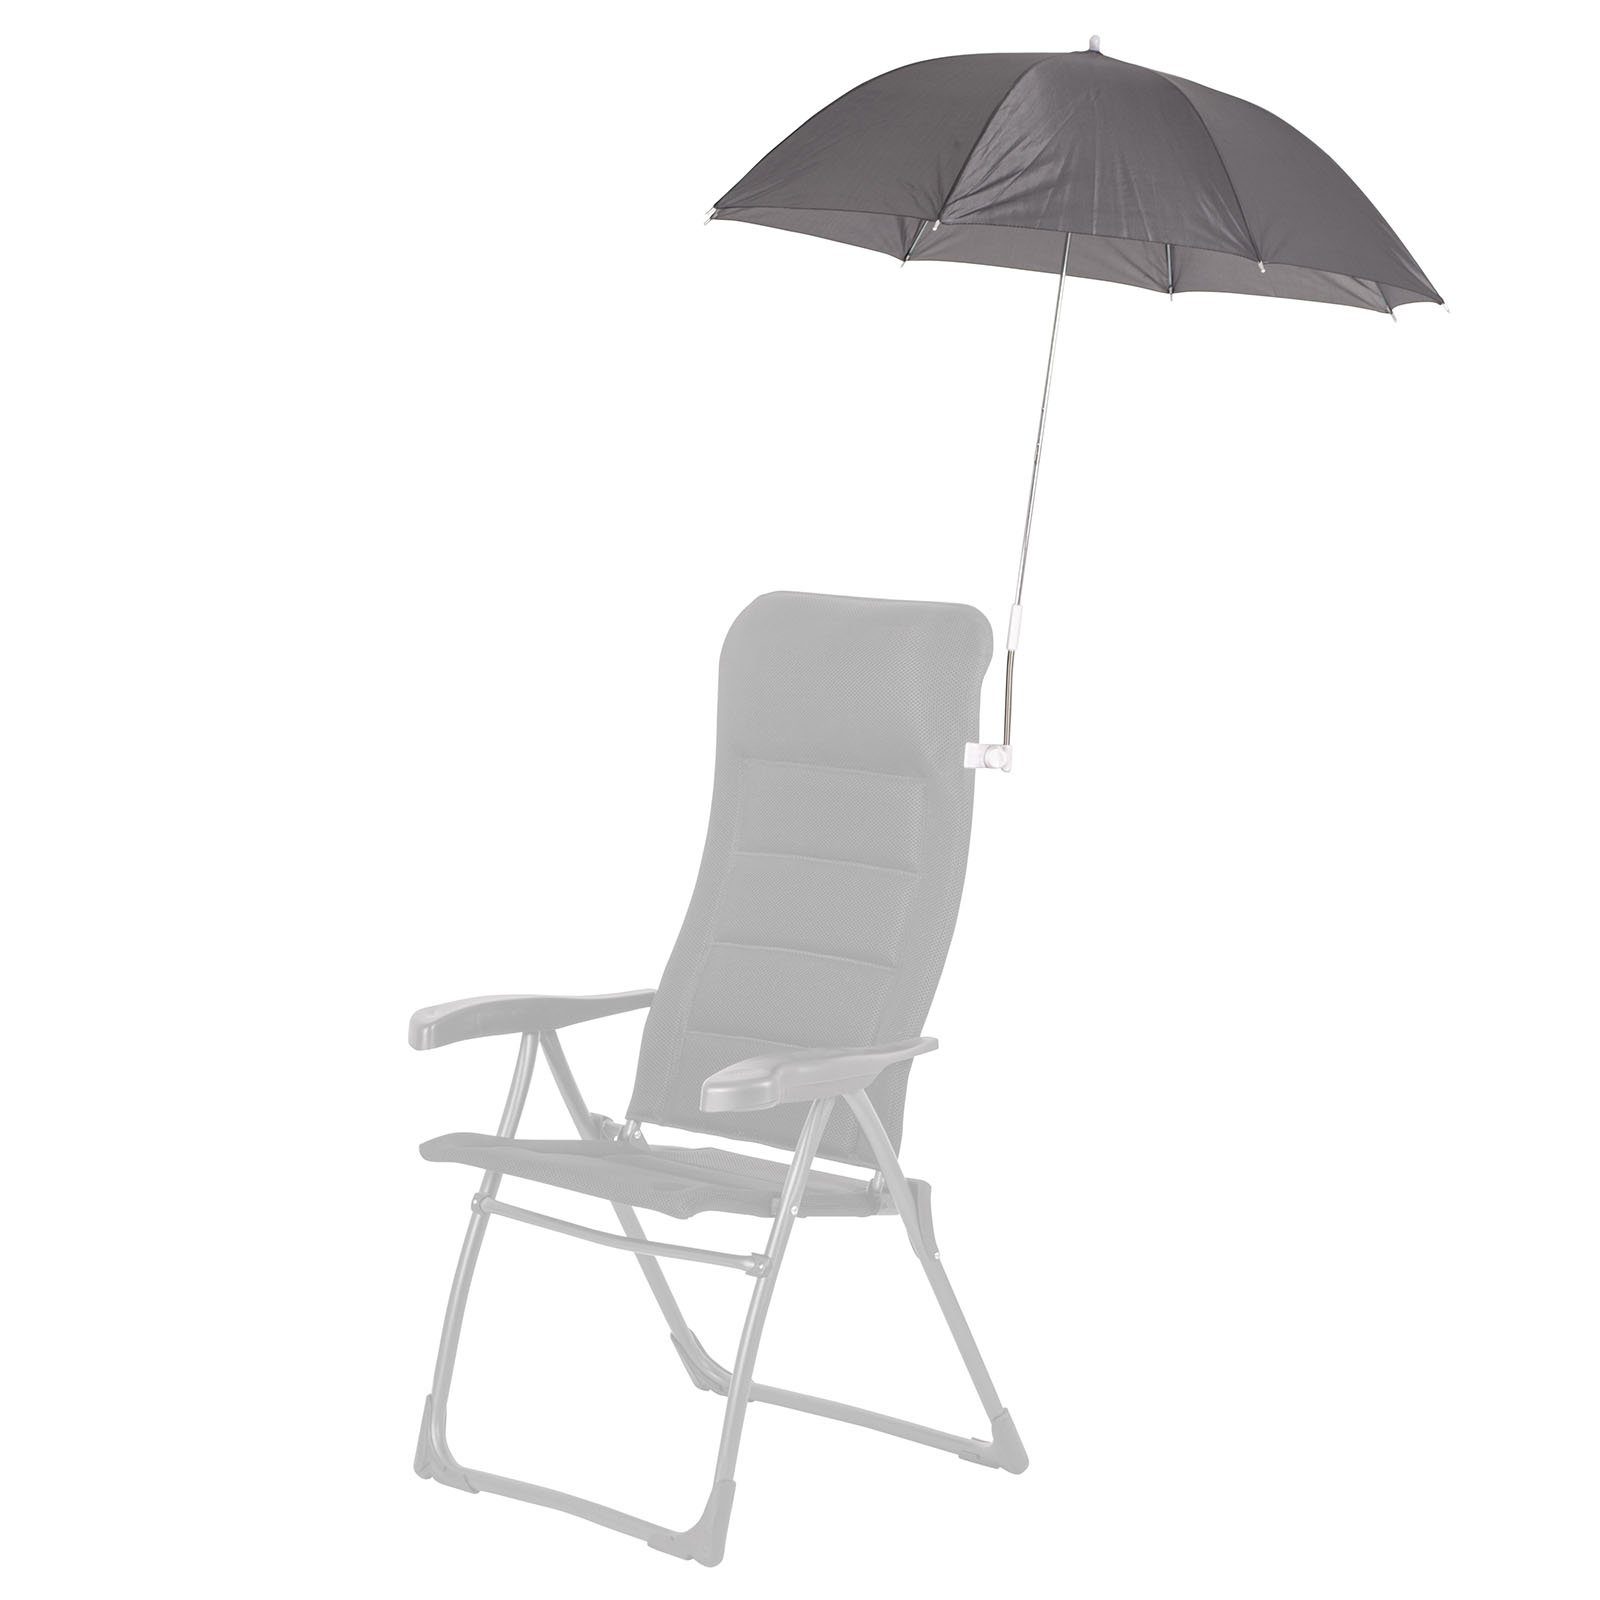 Bo-Camp Campingstuhl Sonnenschirm Für Campingstuhl Regenschirm, Klappstuhl Strand Stuhl Schirm